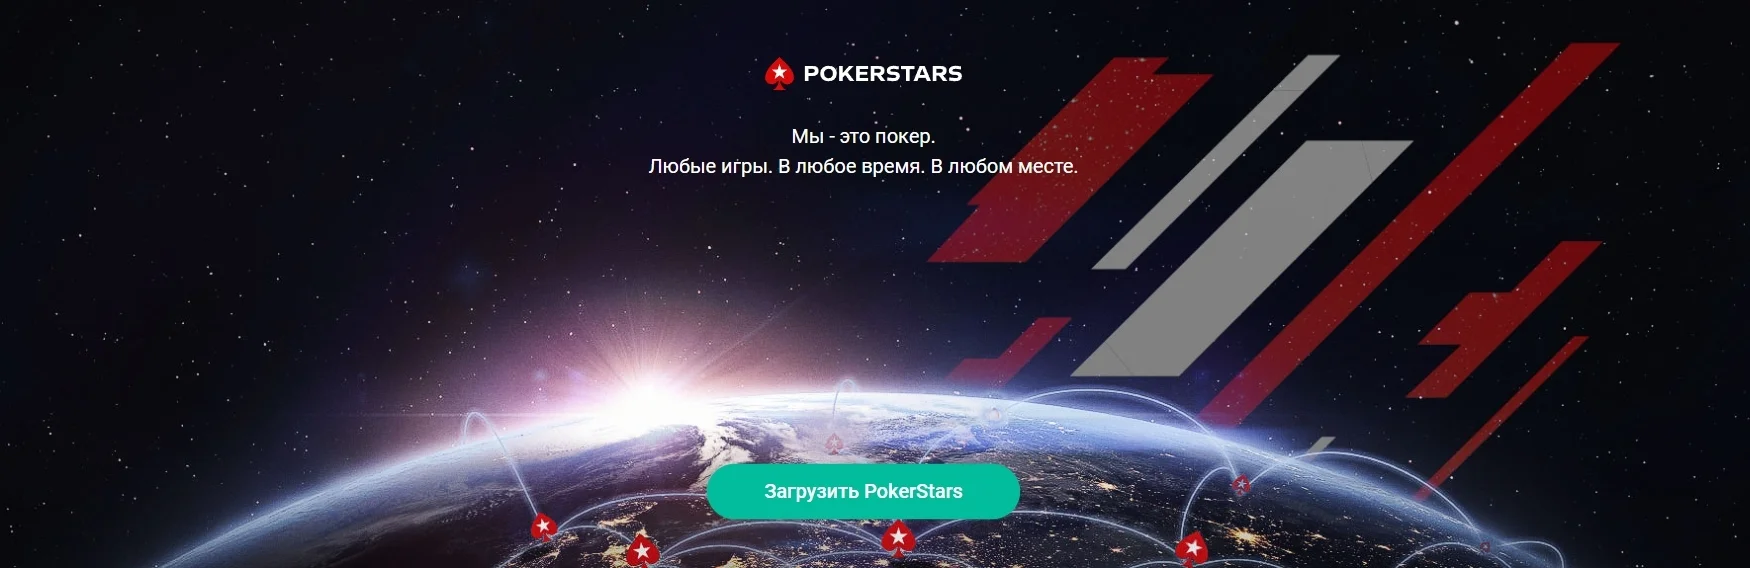 PokerStars скачать казино онлайн